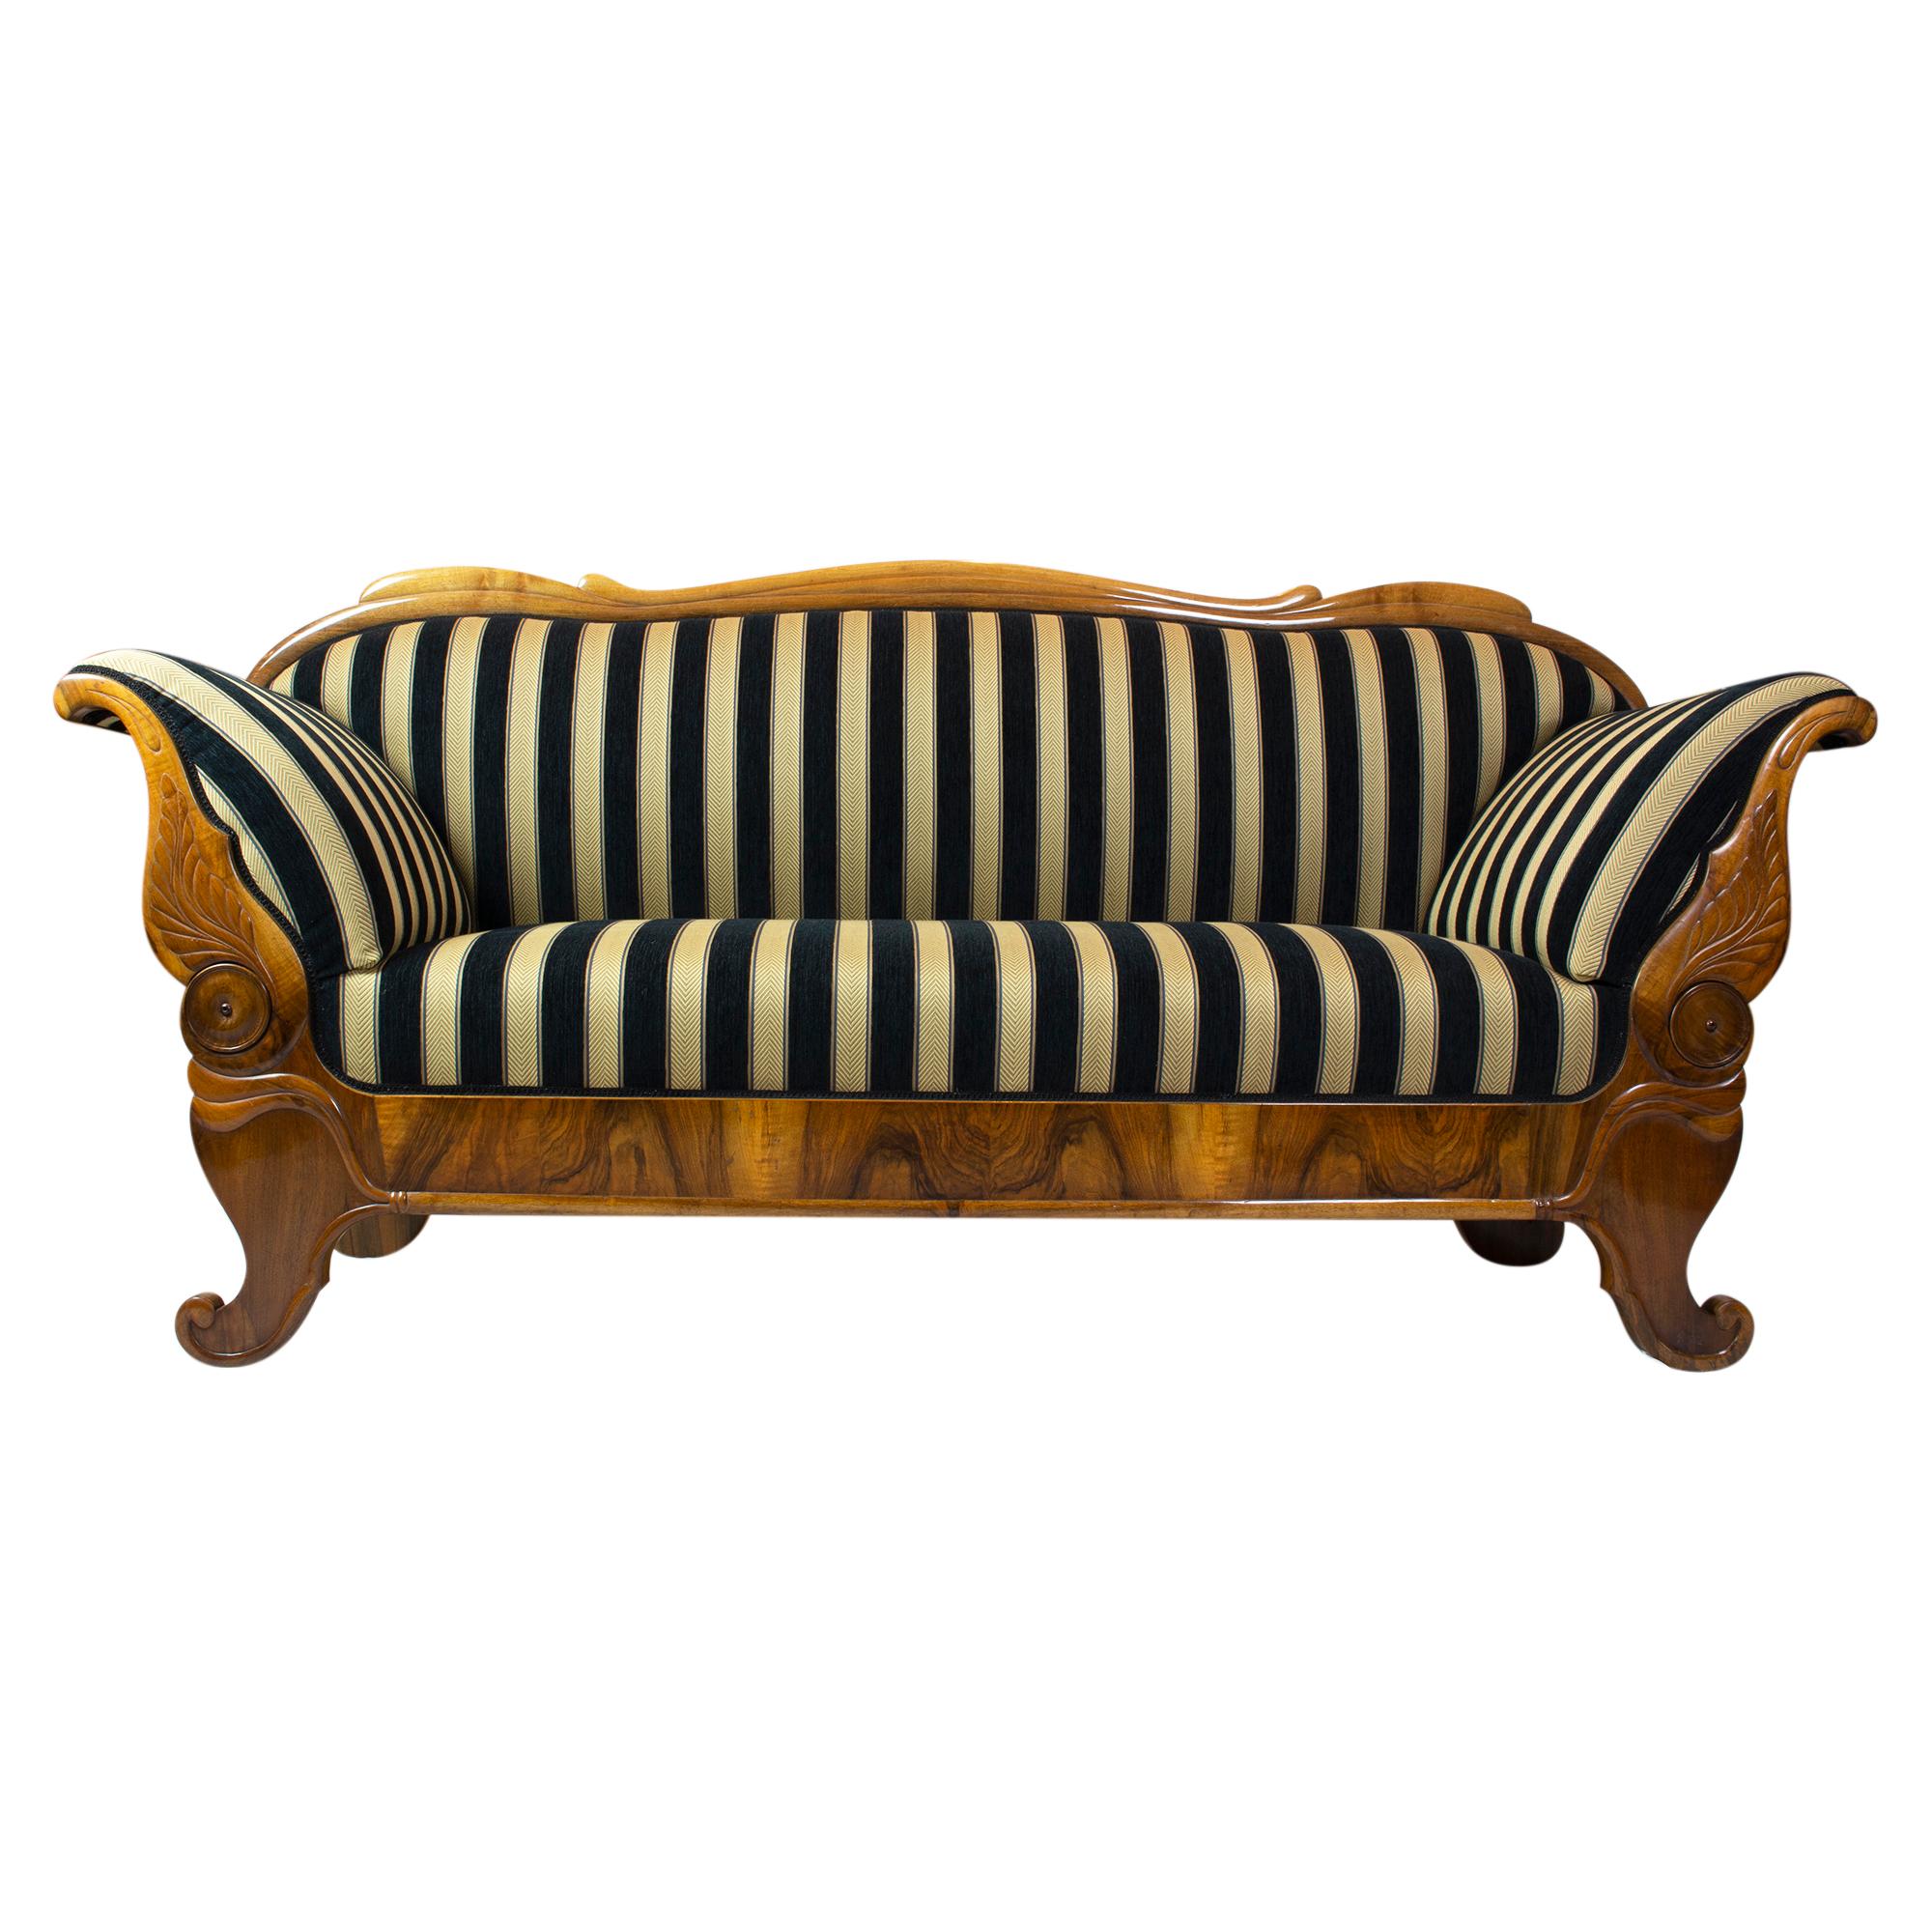 Early 19th Century Biedermeier Walnut Sofa from Germany For Sale 4